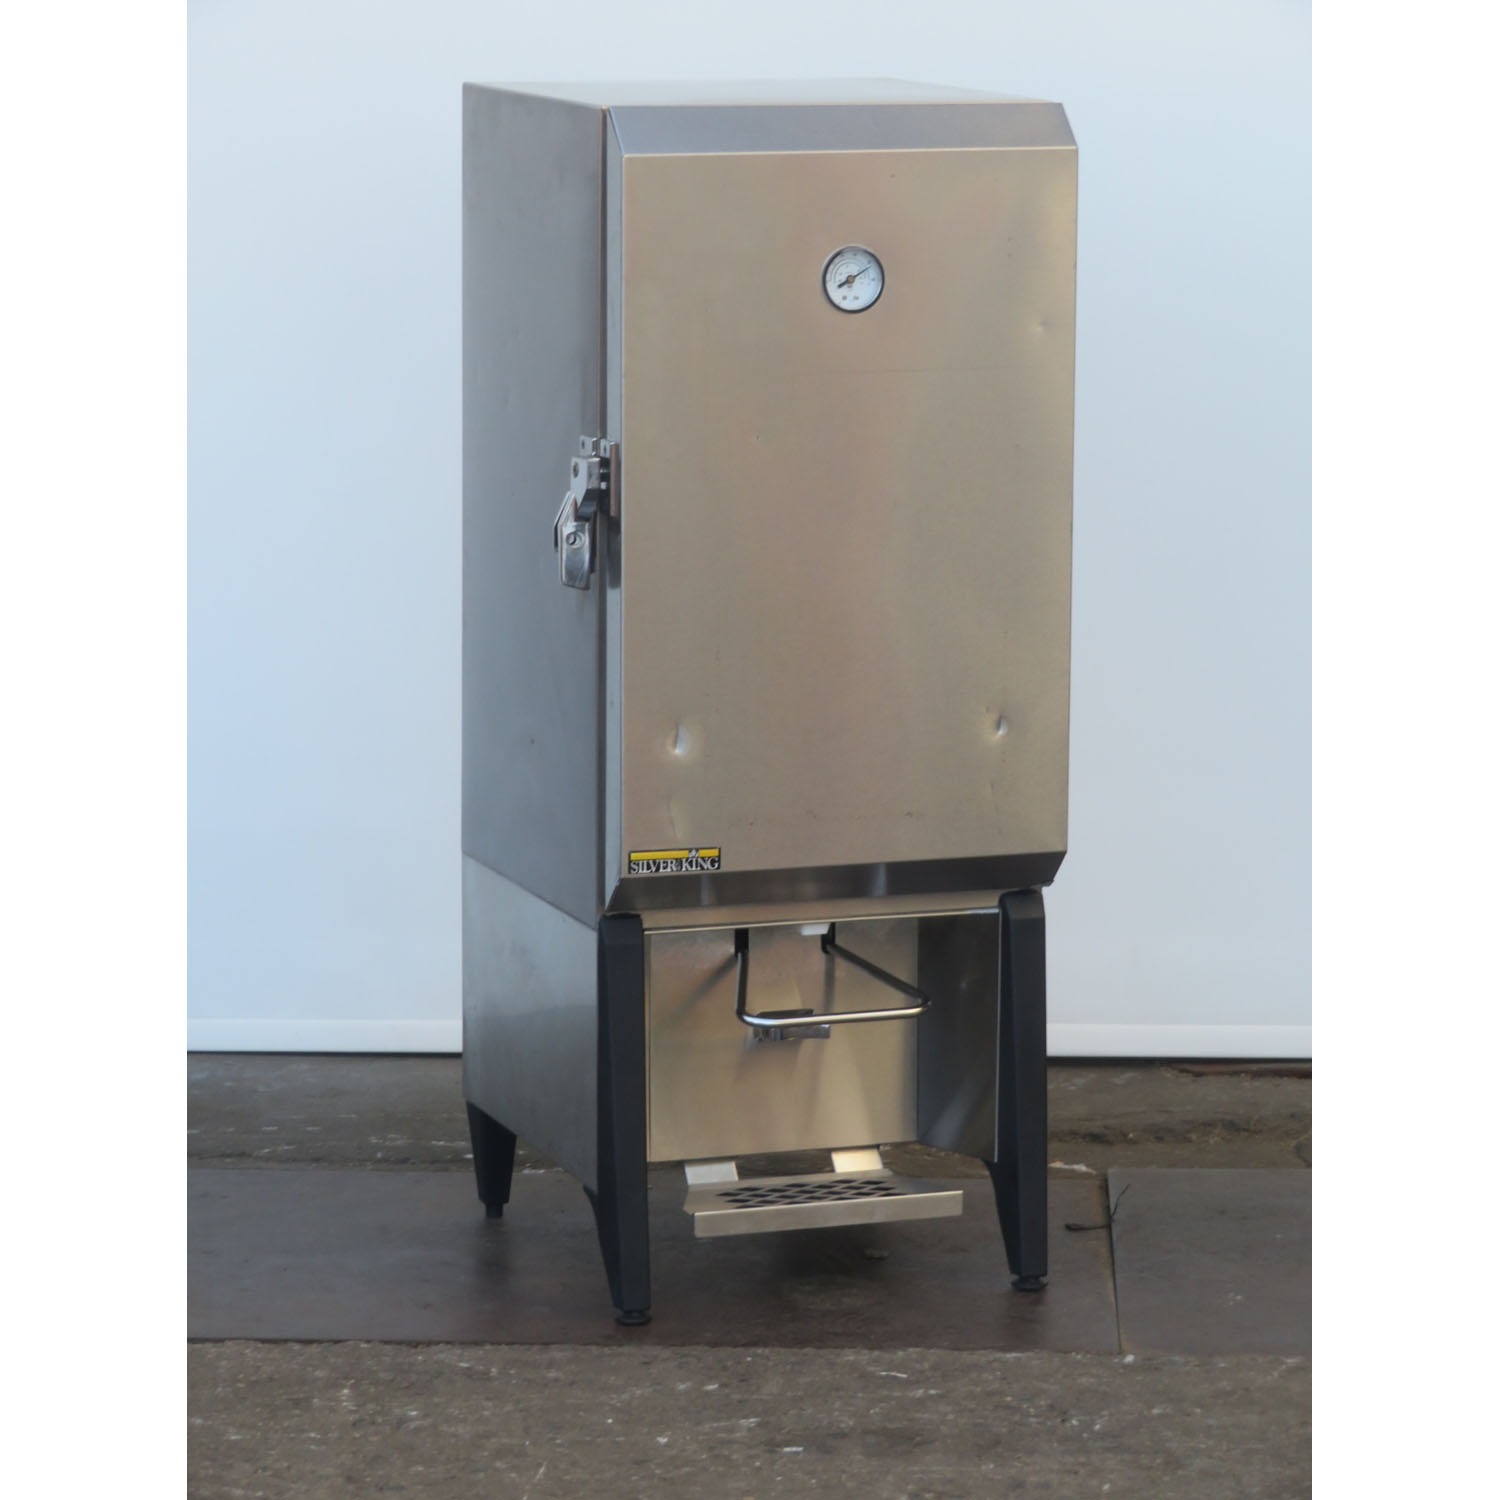 Silver King SKMAJ1-C4 Milk Dispenser, Used Great Condition